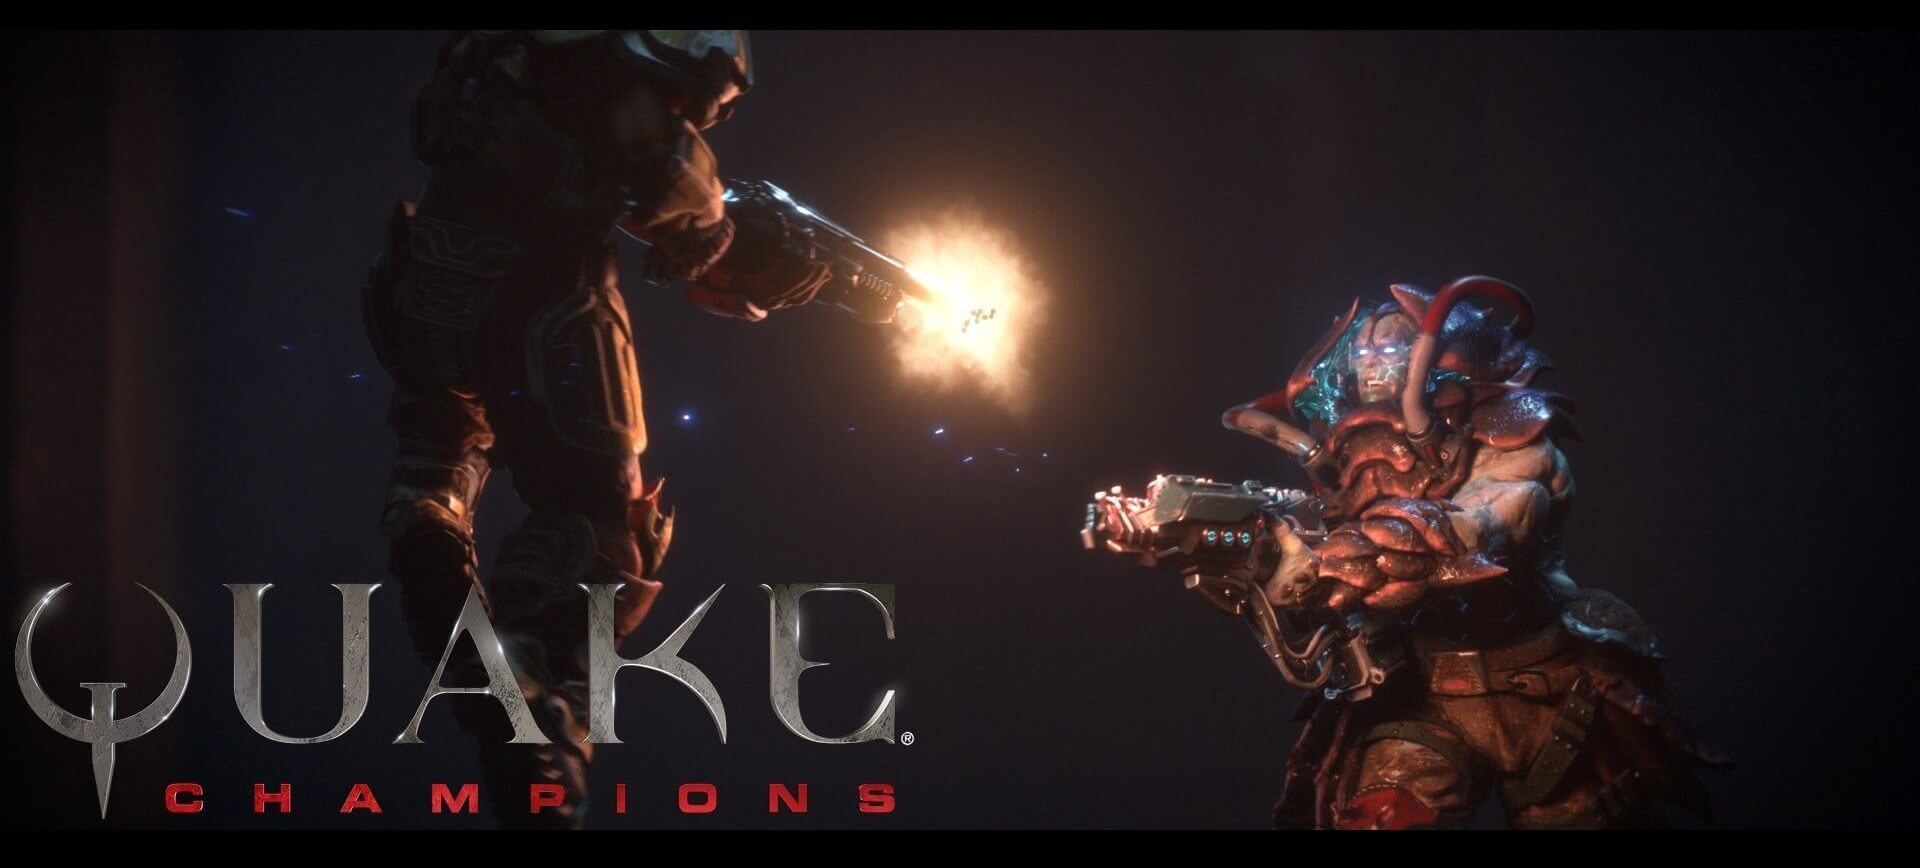 Quake-champions